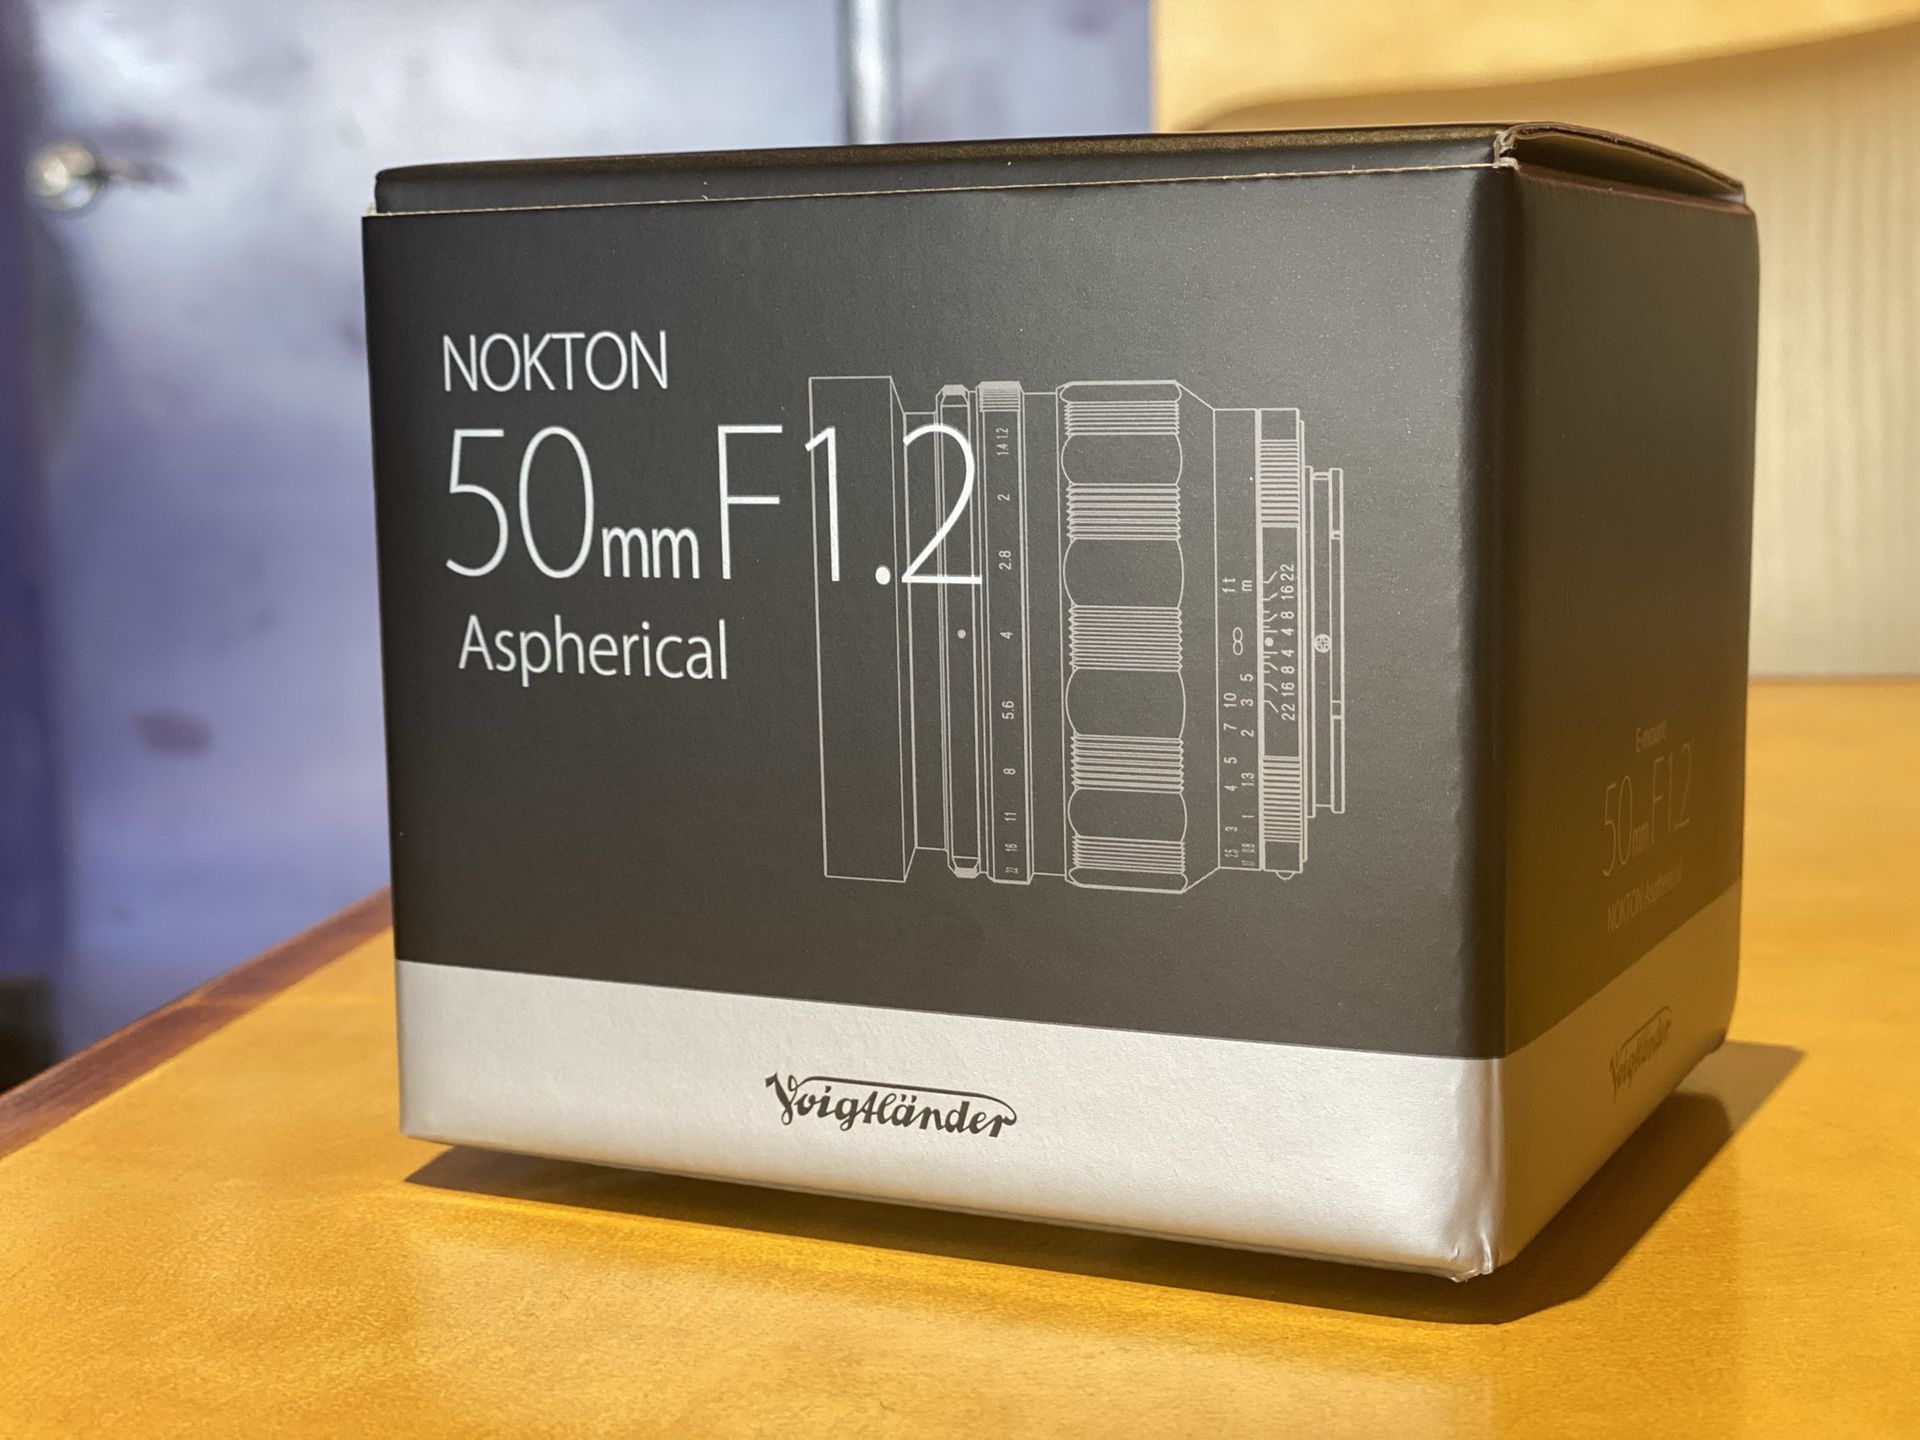 Like new condition Voightlander Norton 50mm f1.2 for Sony E mount